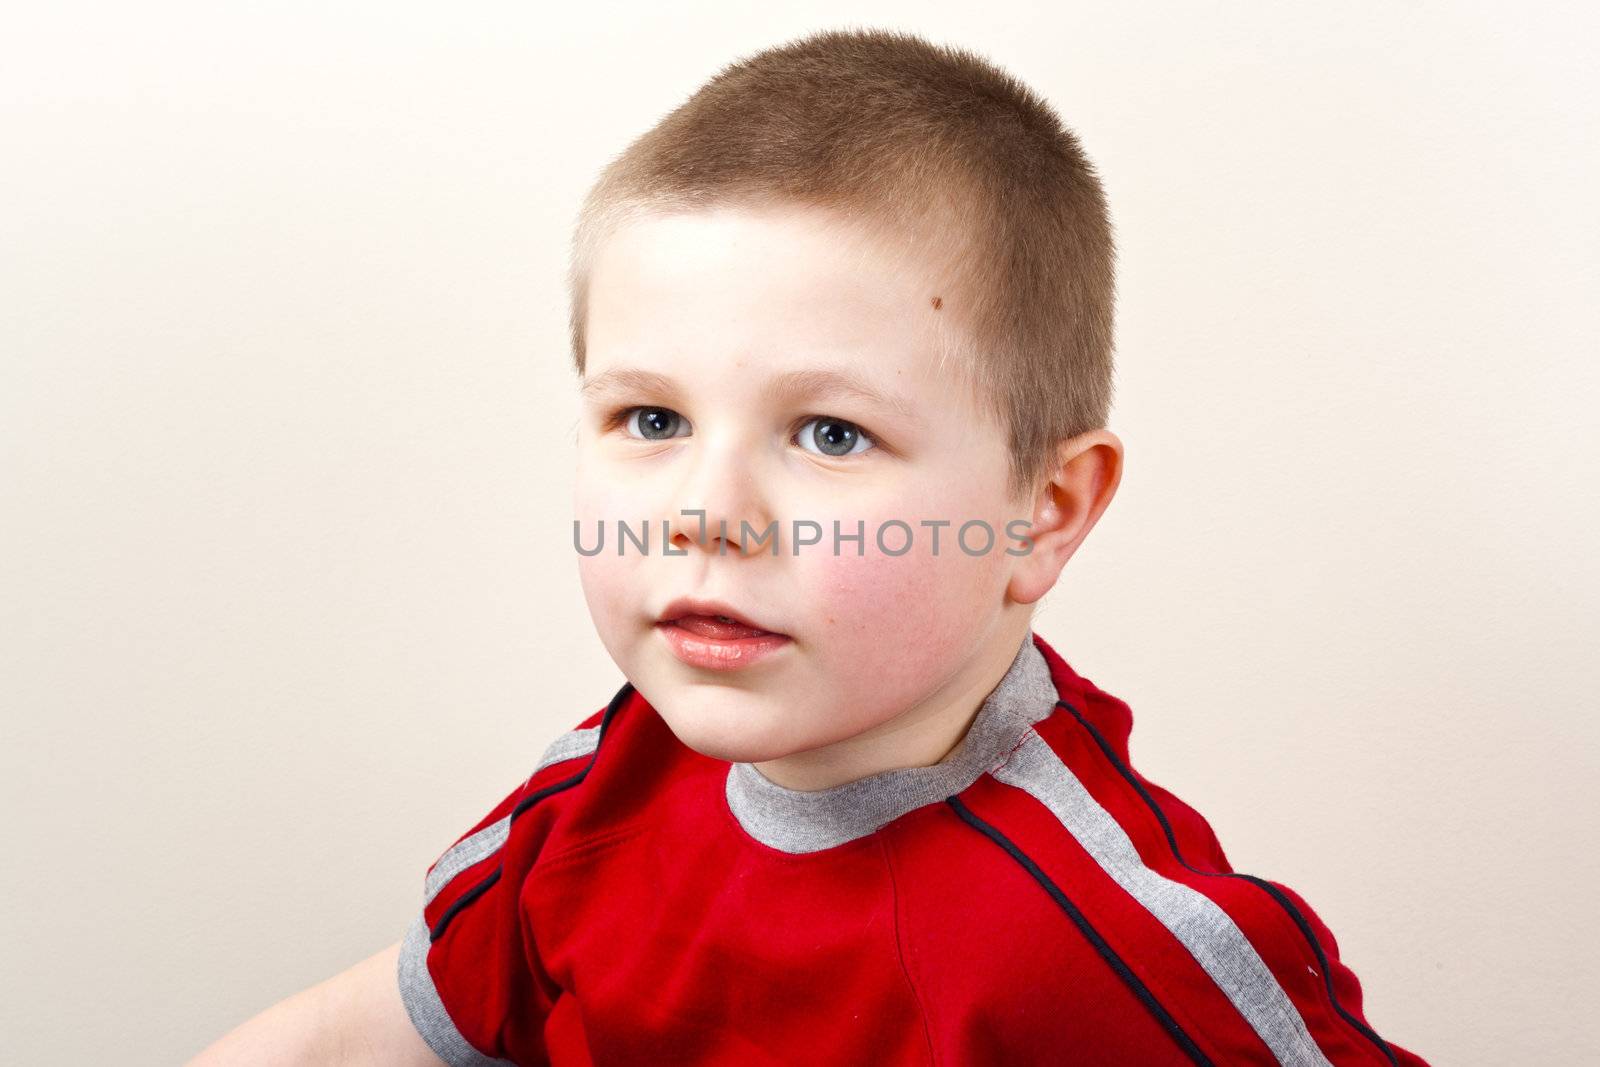 portrait of little boy in red shirt